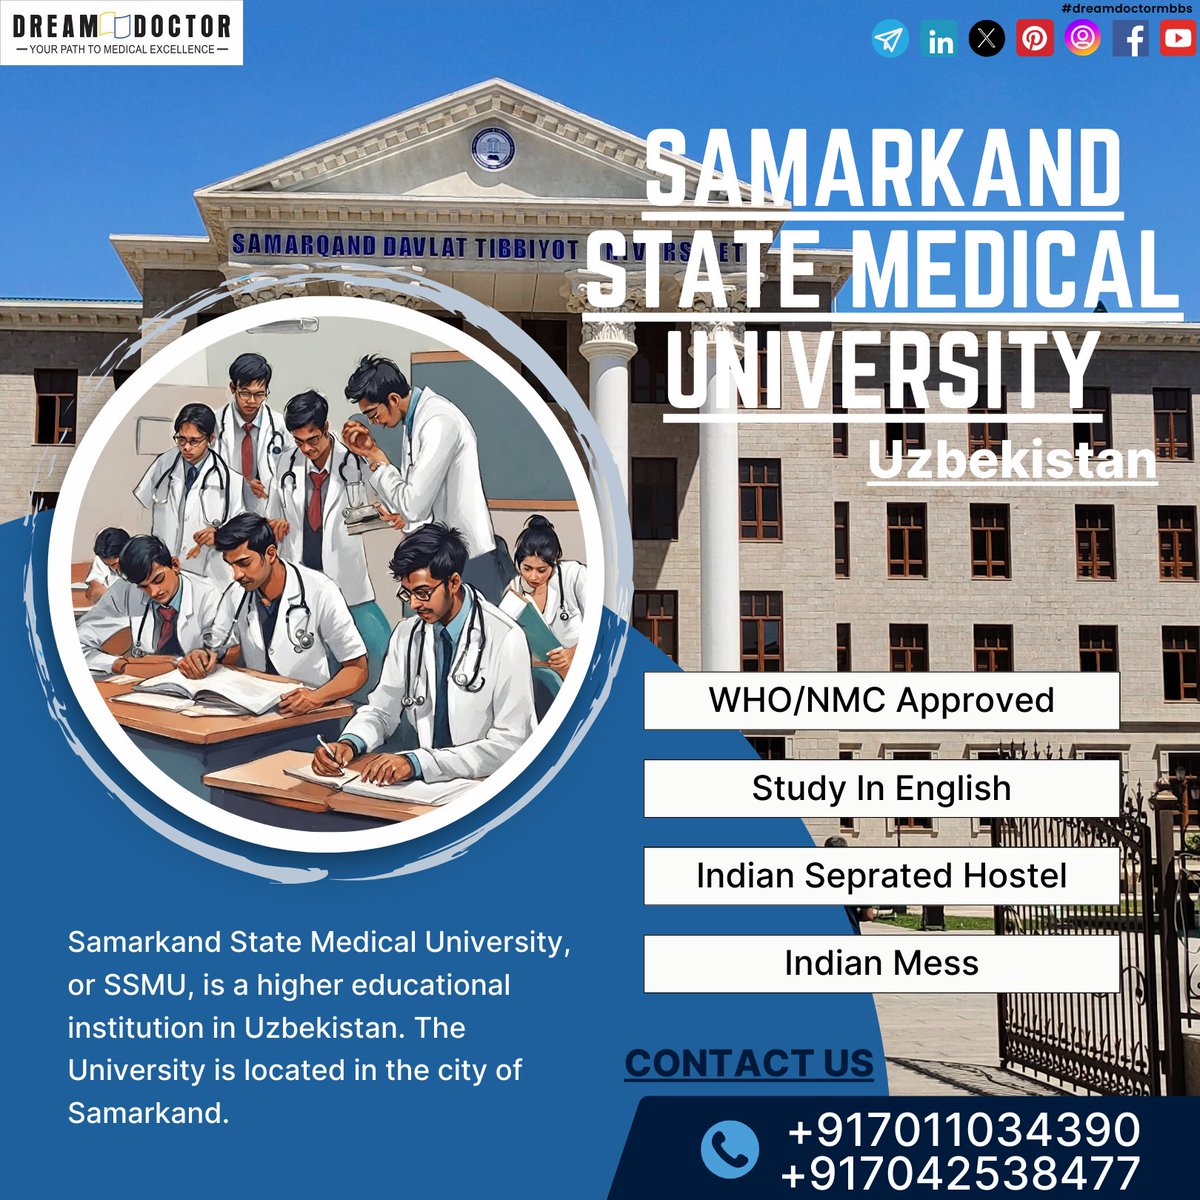 Samarkand State medical University batch 2024-25
Coming Soon

#samarkand #dreamdoctormbbs #Uzbekistan #Samarkand #mbbs #medical #medicine #study #student #motivation #samarkandstatemedicaluniversity #mbbsabroad #neet #neetaspirants #neet2024